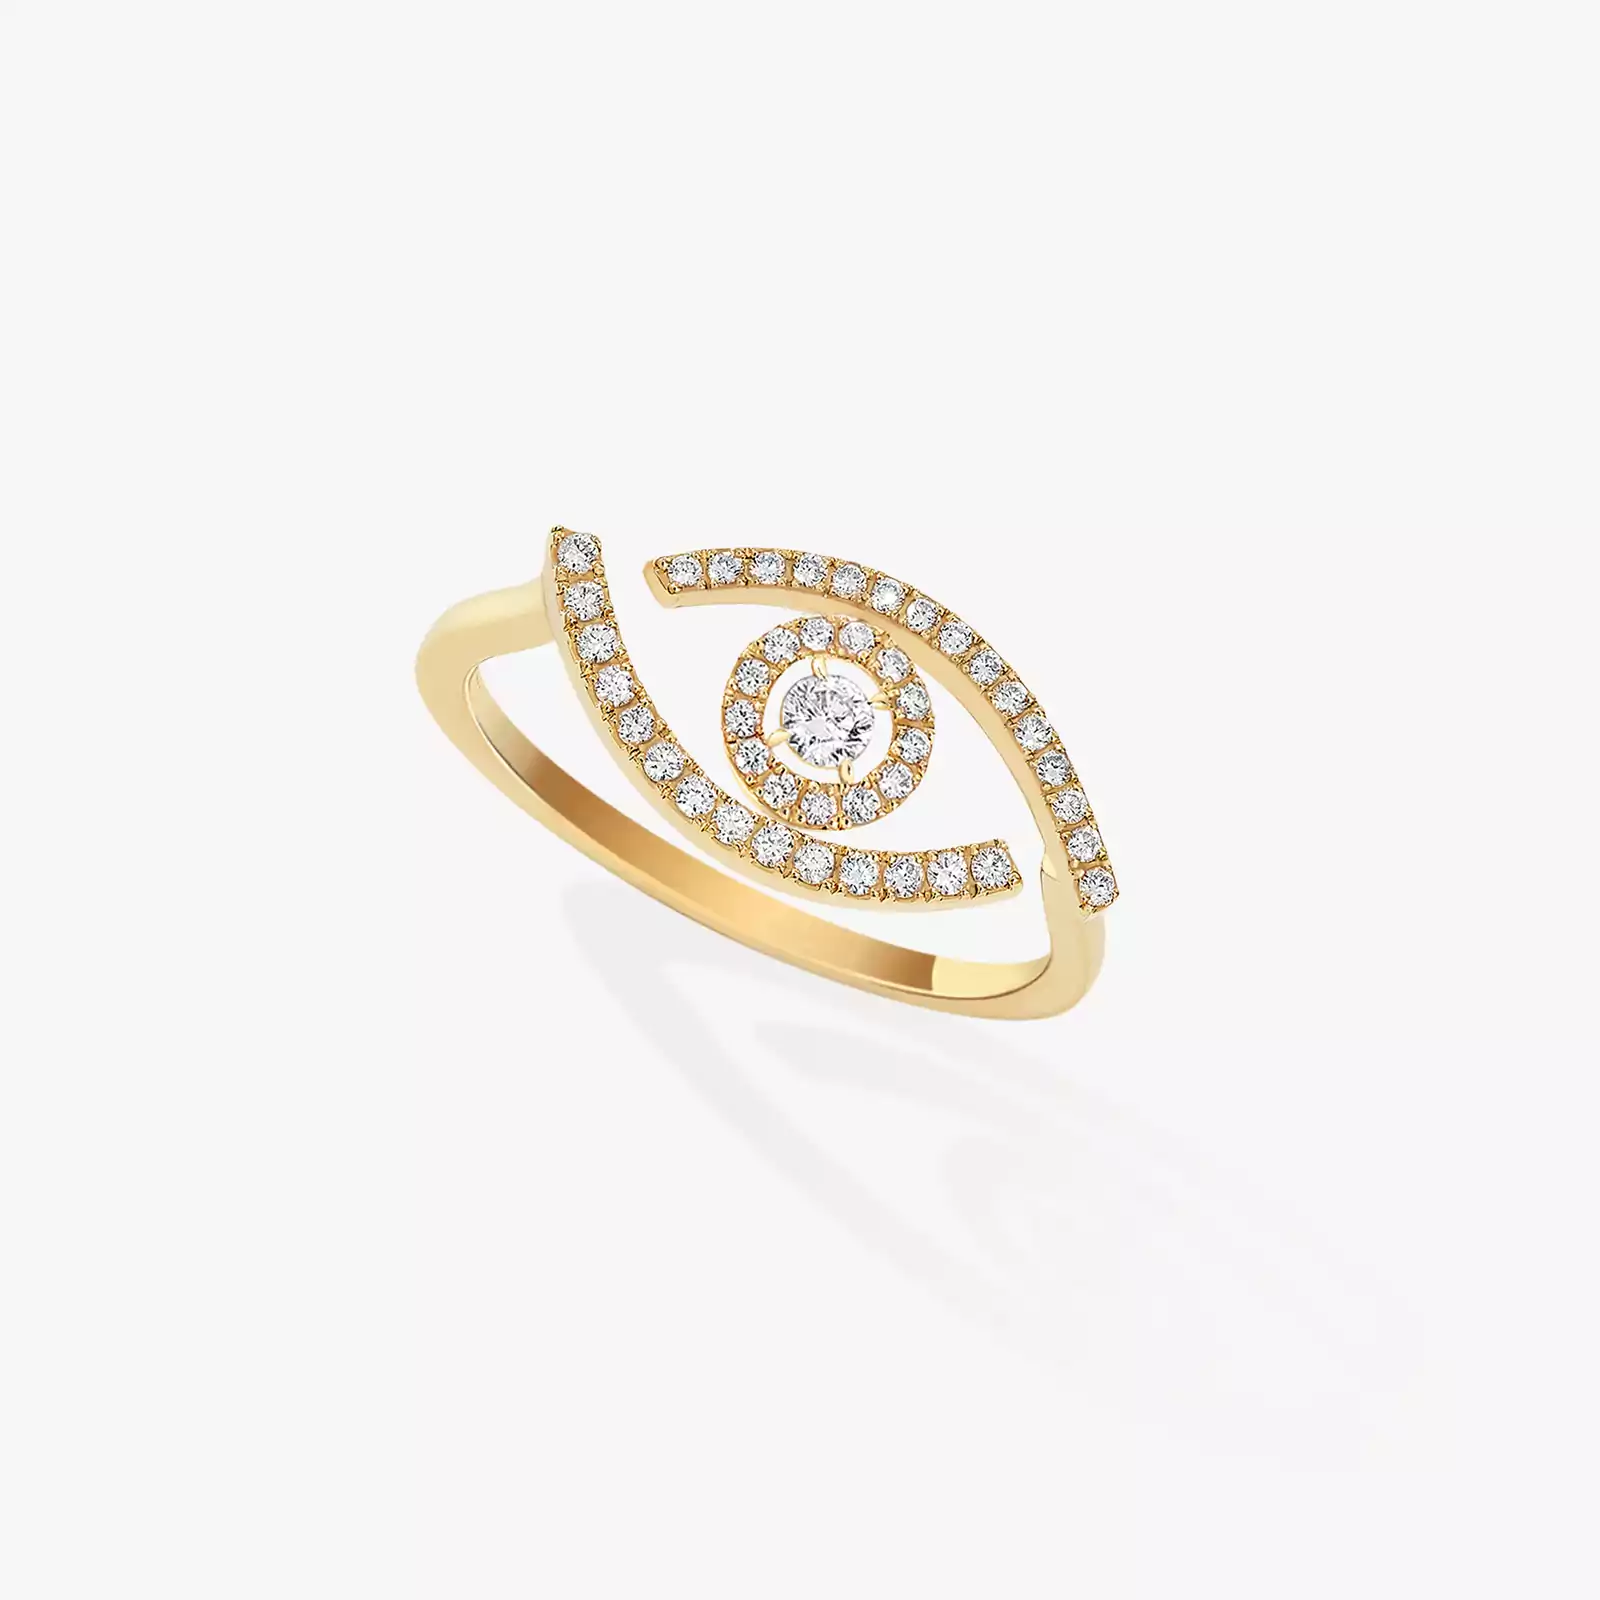 Bague Femme Or Jaune Diamant Lucky Eye Pavée 10037-YG